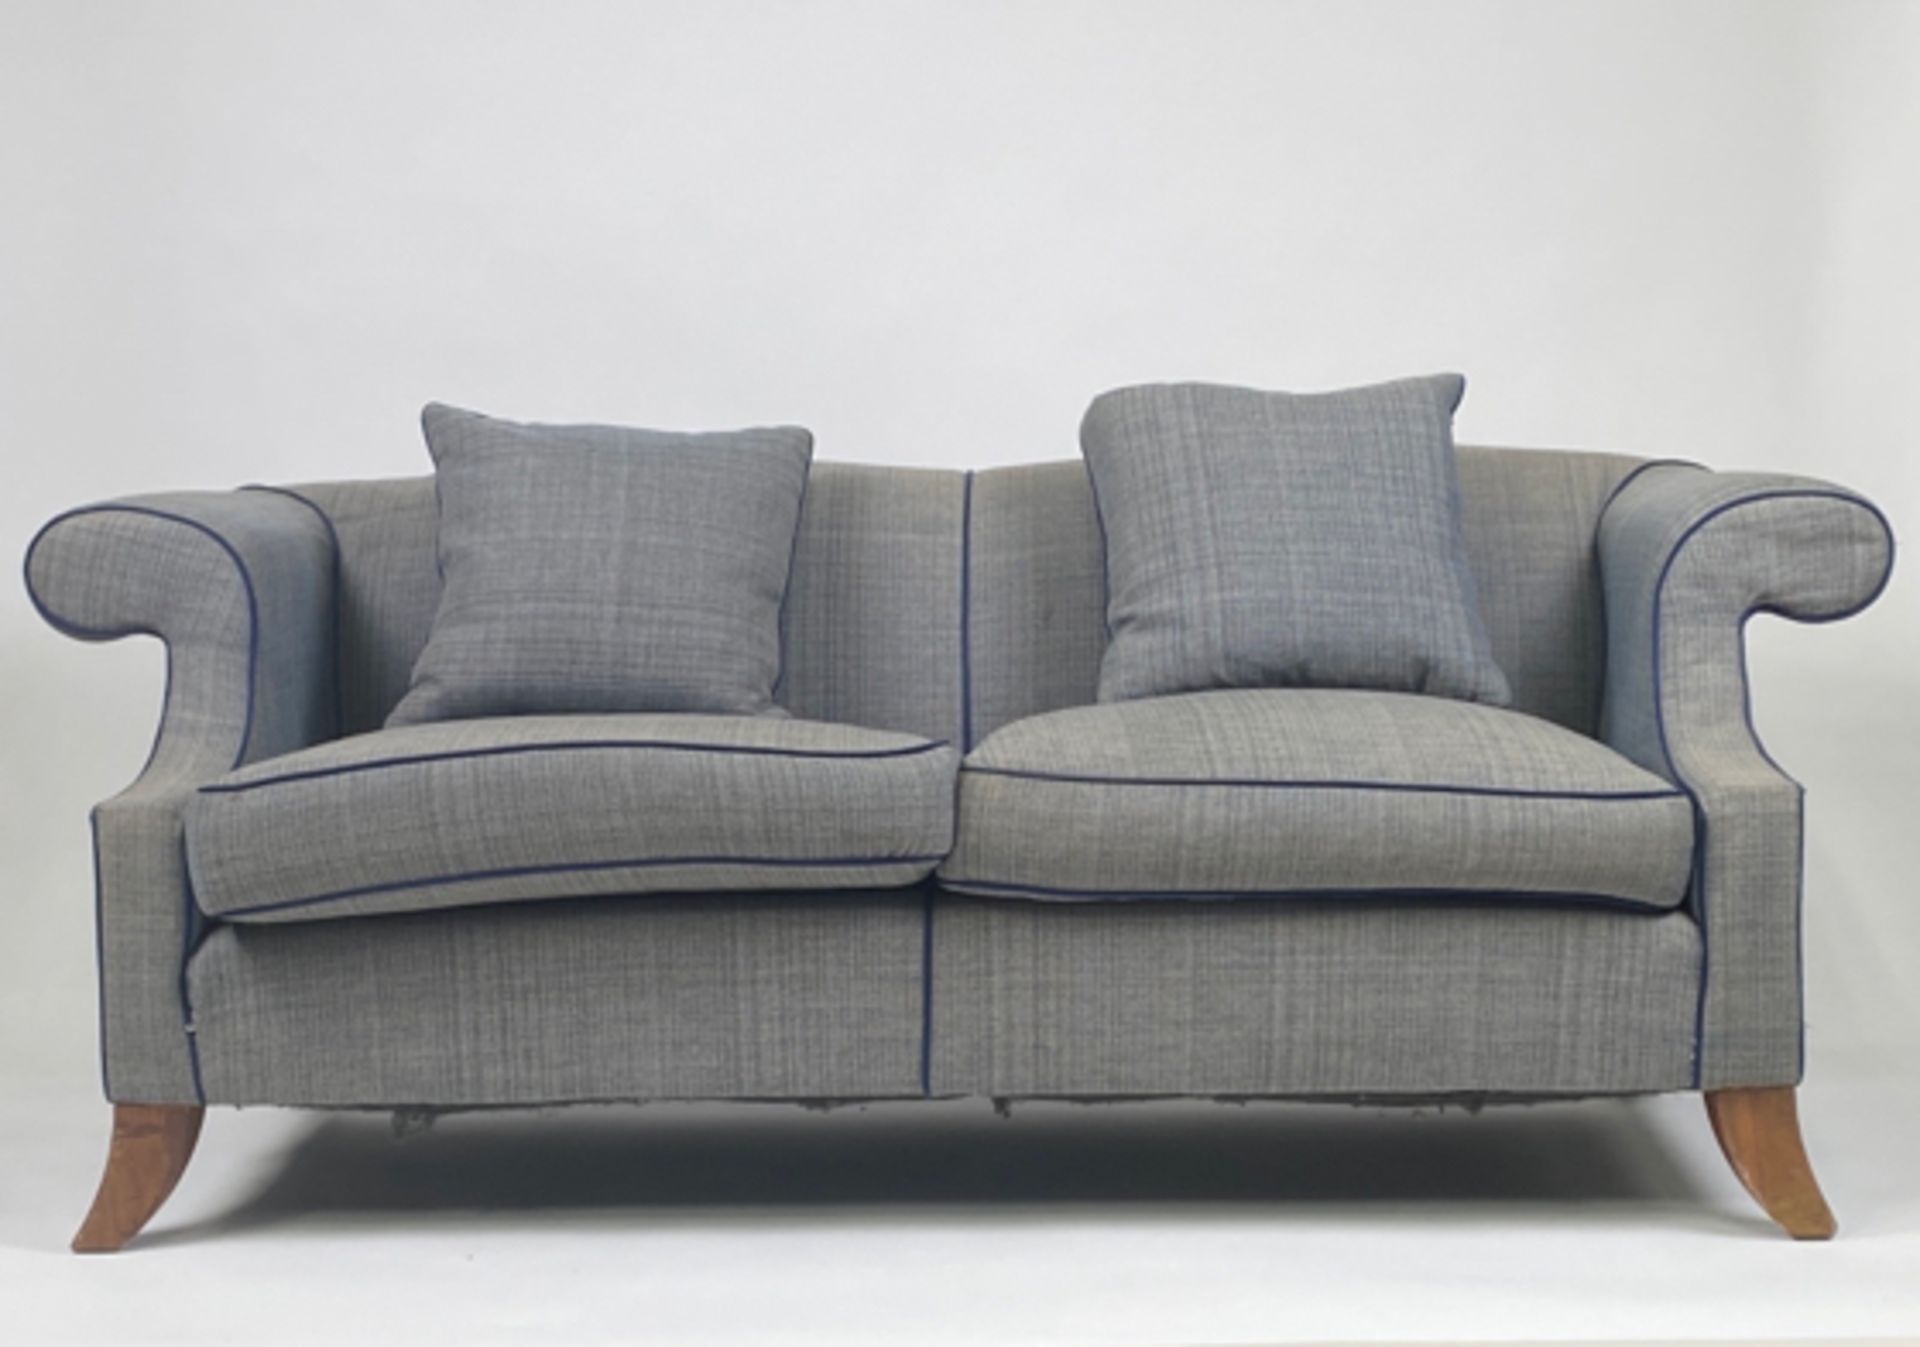 Bespoke David Linley Sofa Made for Claridge's